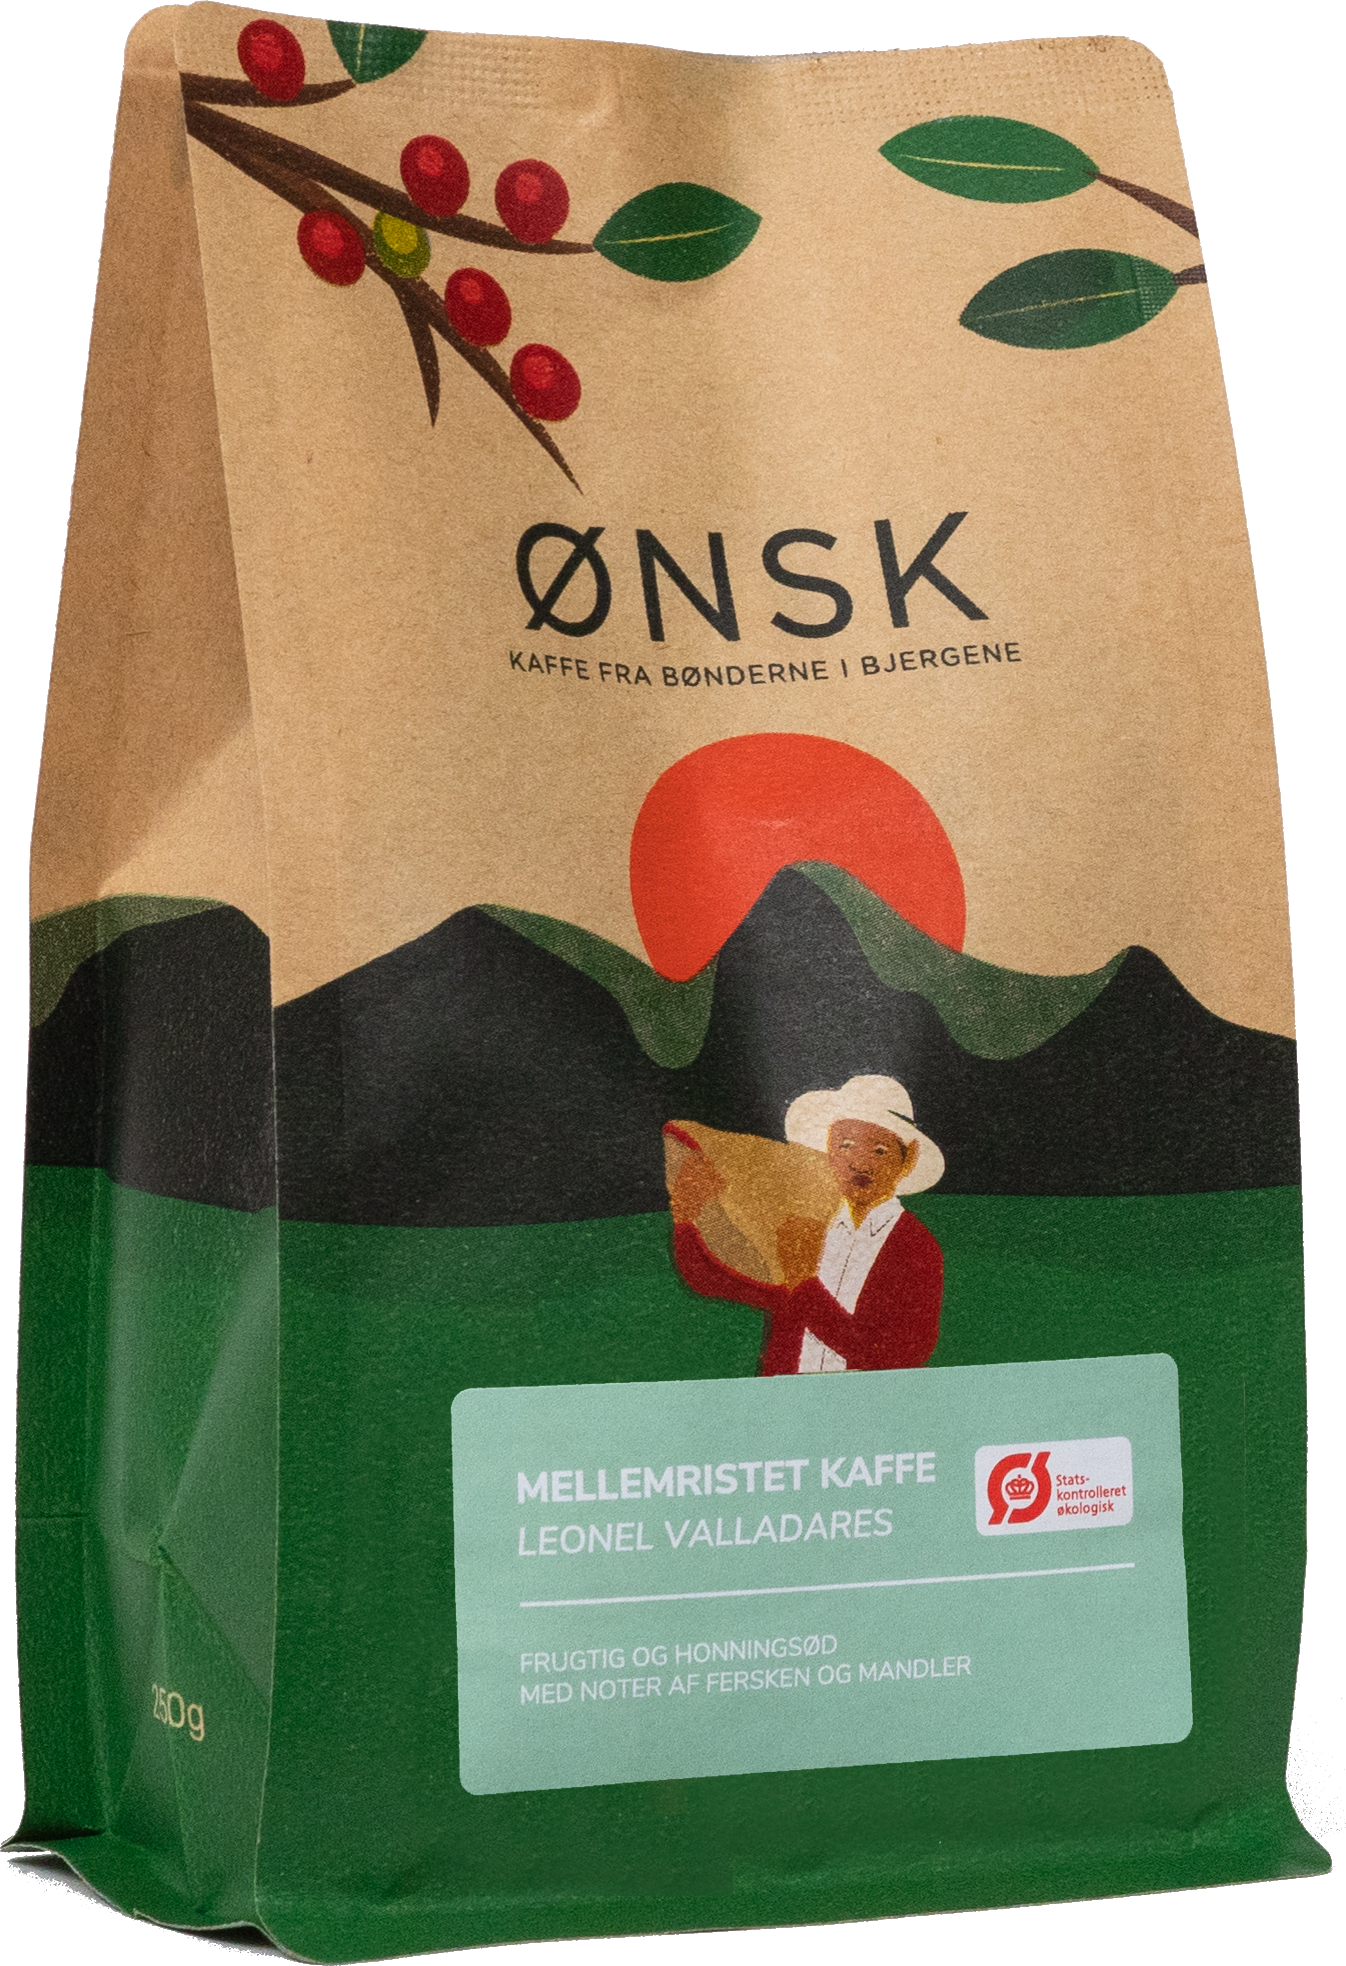 ØNSK Coffee bag with medium roast, organic coffee beans from Leonel Valladares